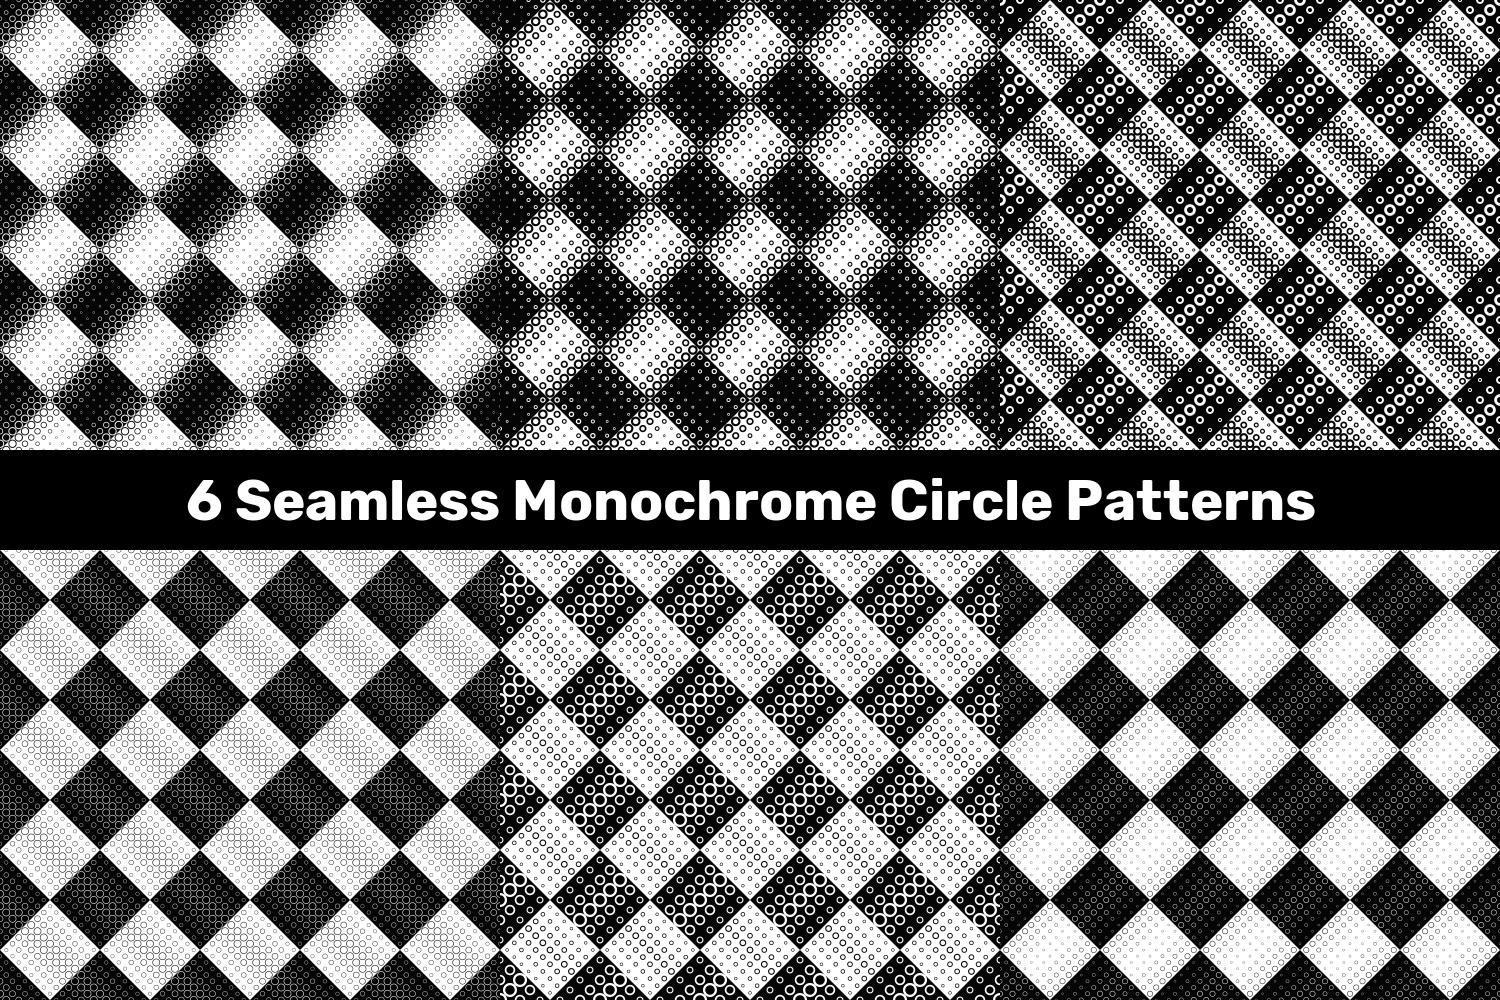 6 Seamless Monochrome Circle Patterns